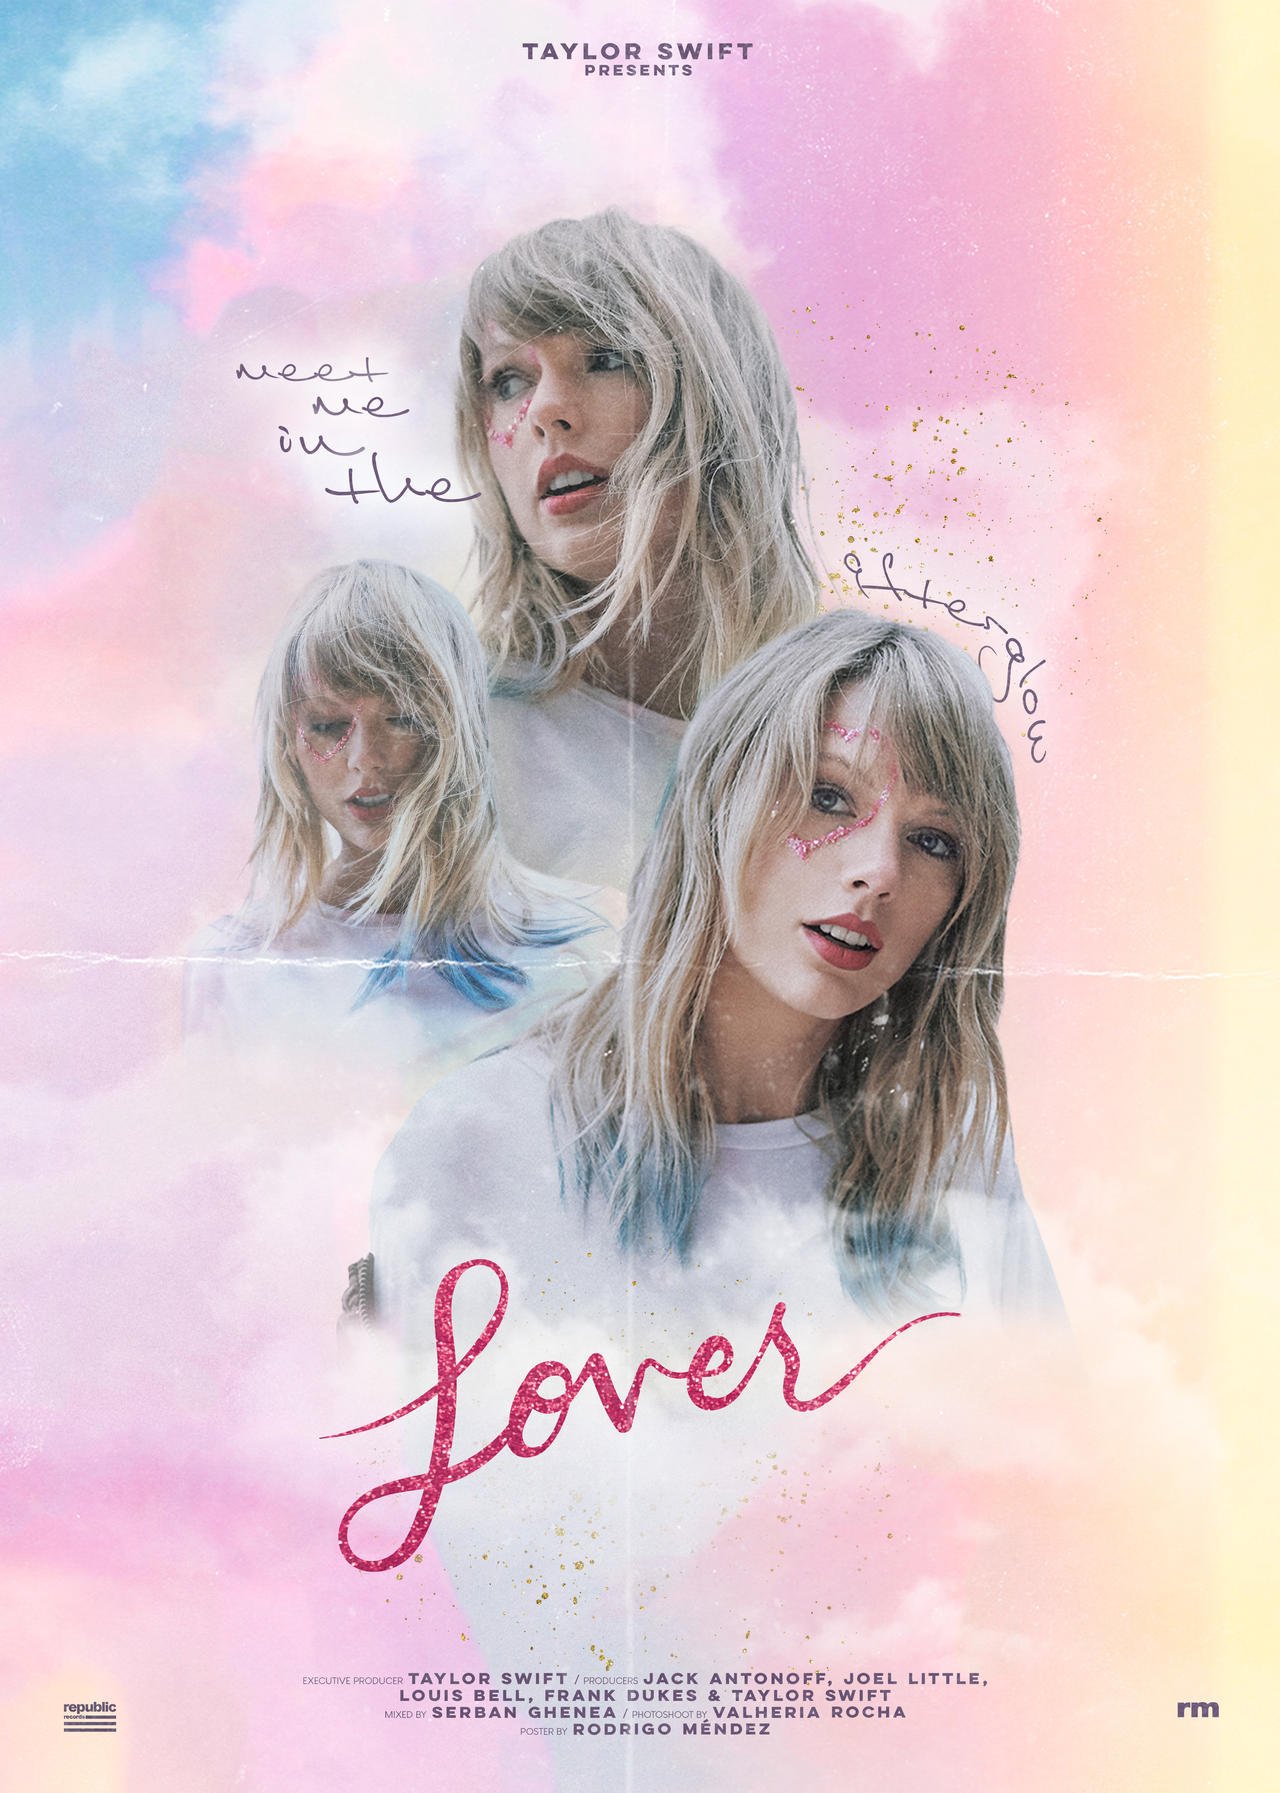 Taylor Swift 'Lover' Poster 2 by rodrigomndzz on DeviantArt